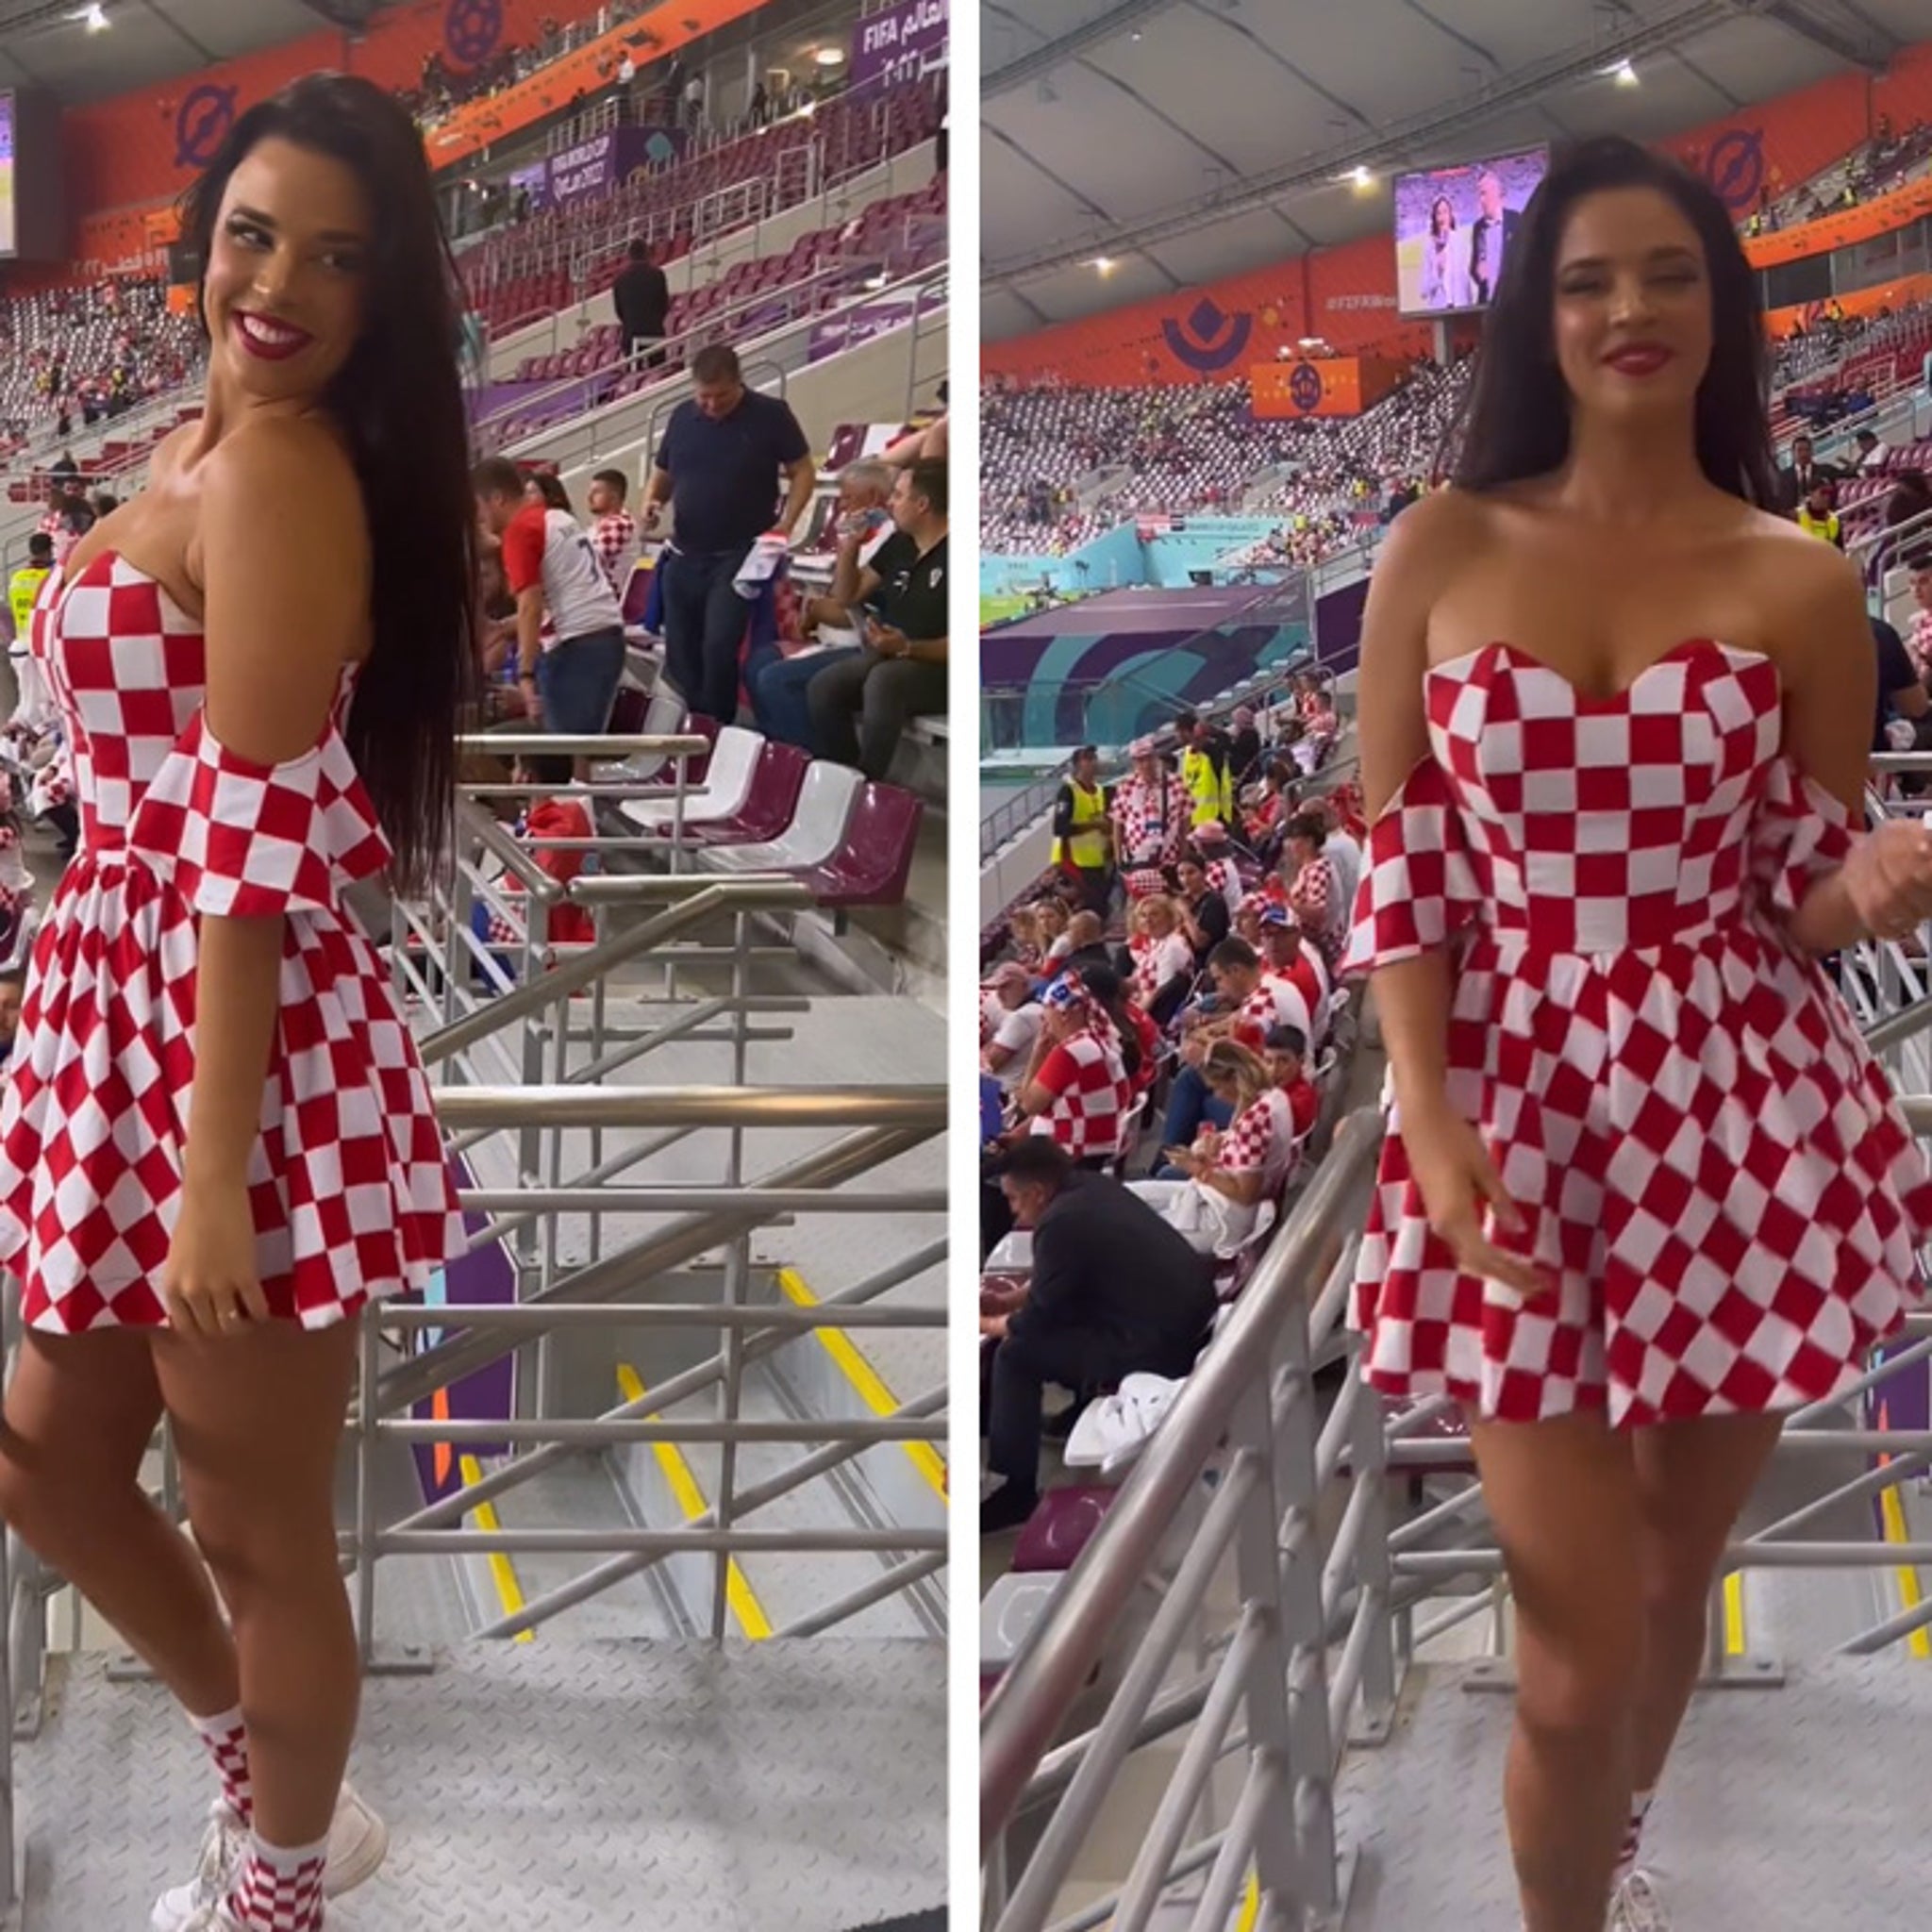 World Cup's 'hottest fan' ready to cheer on Croatia in mini dress despite ' modesty' warning by Qatar